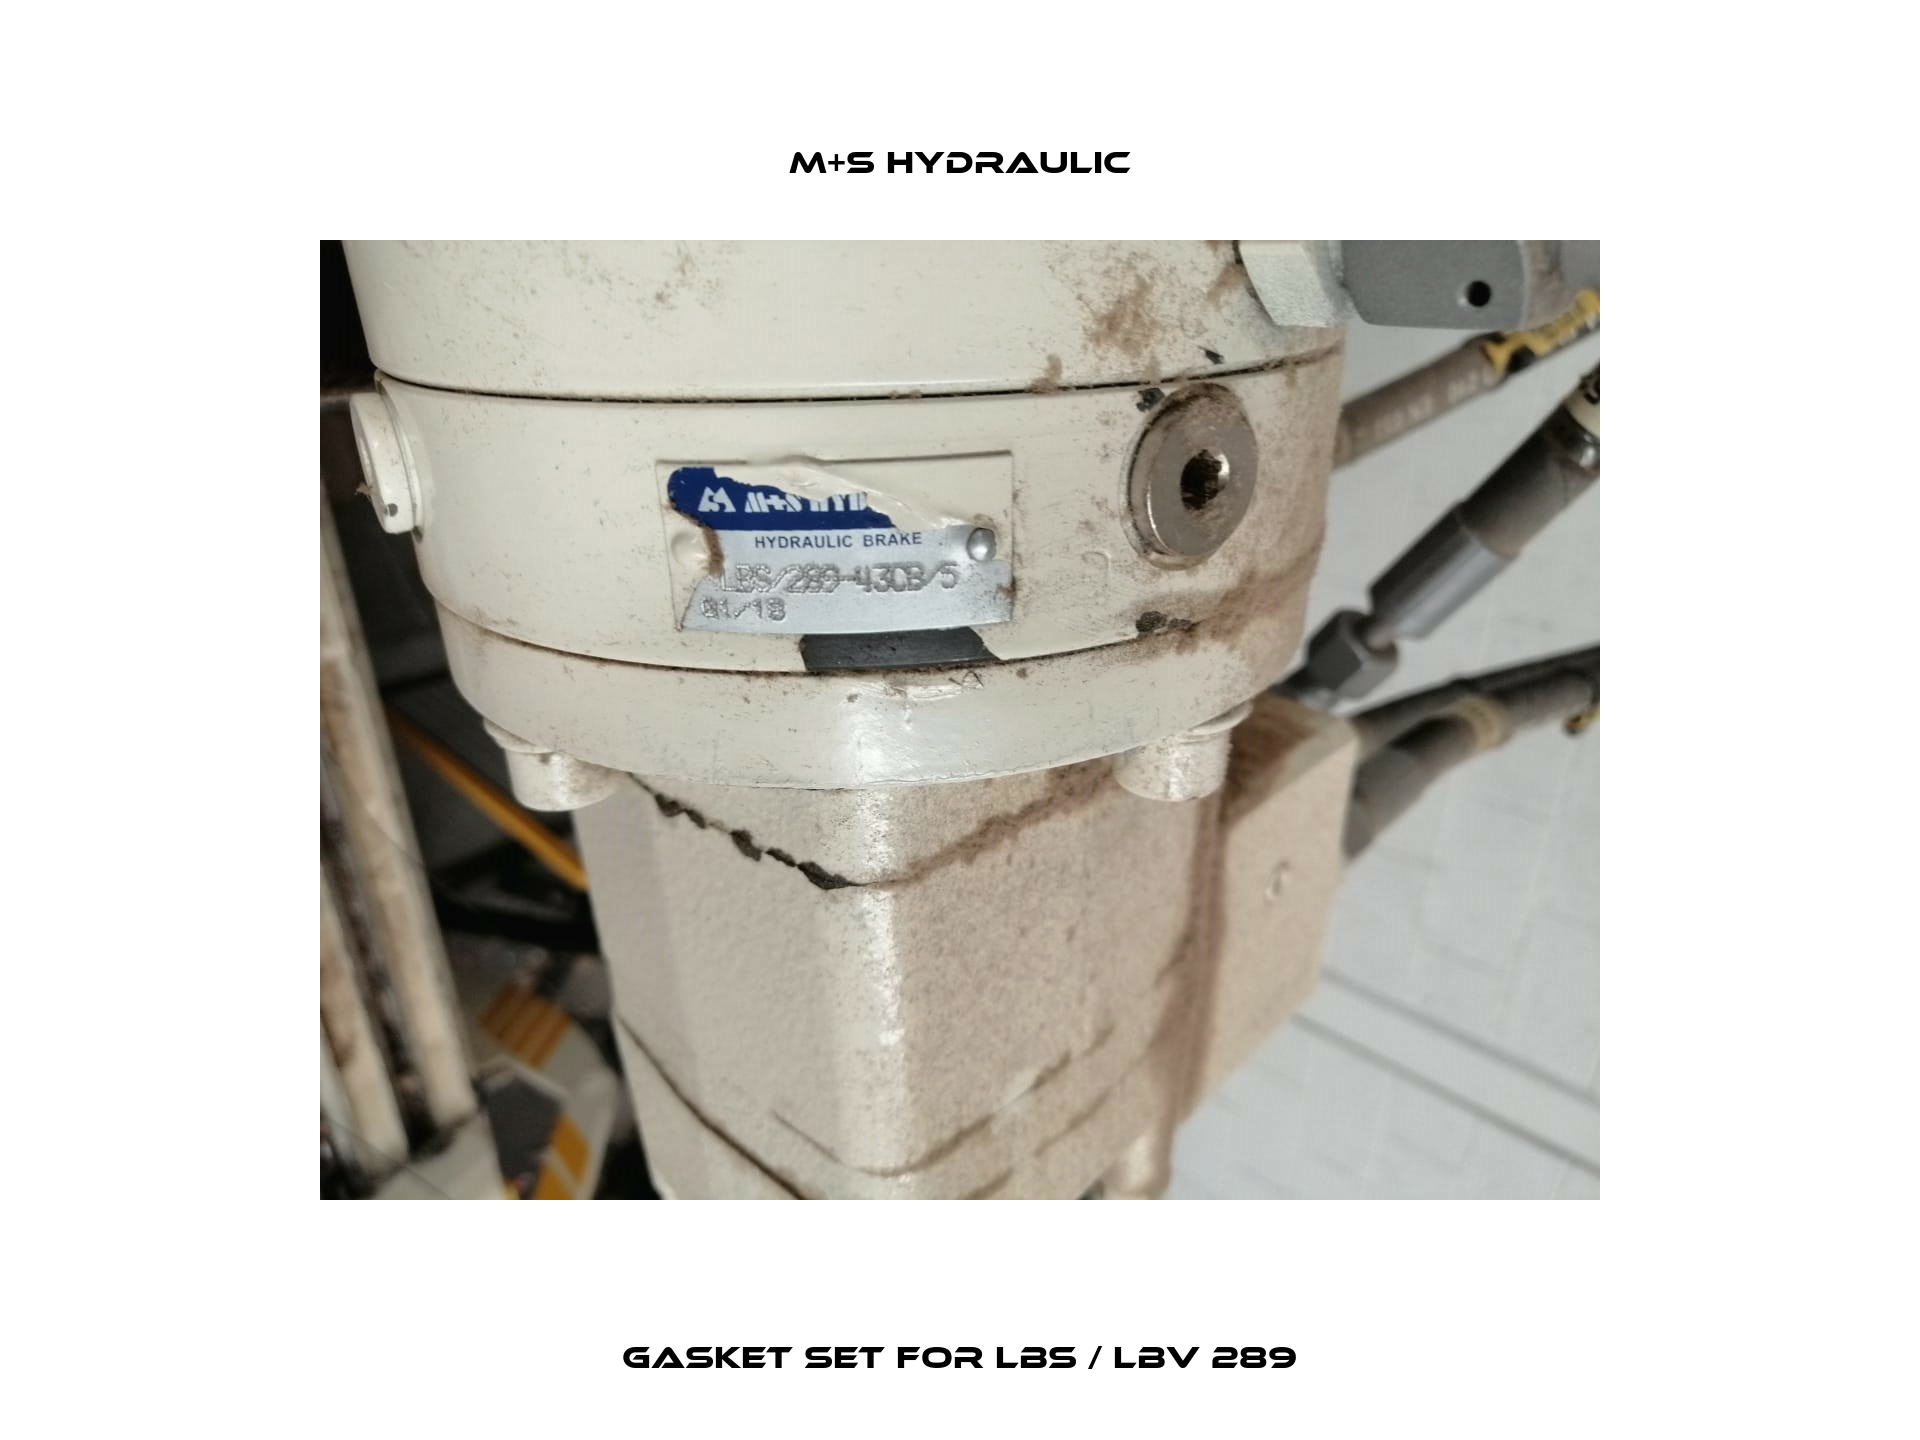 Gasket set for LBS / LBV 289 M+S HYDRAULIC